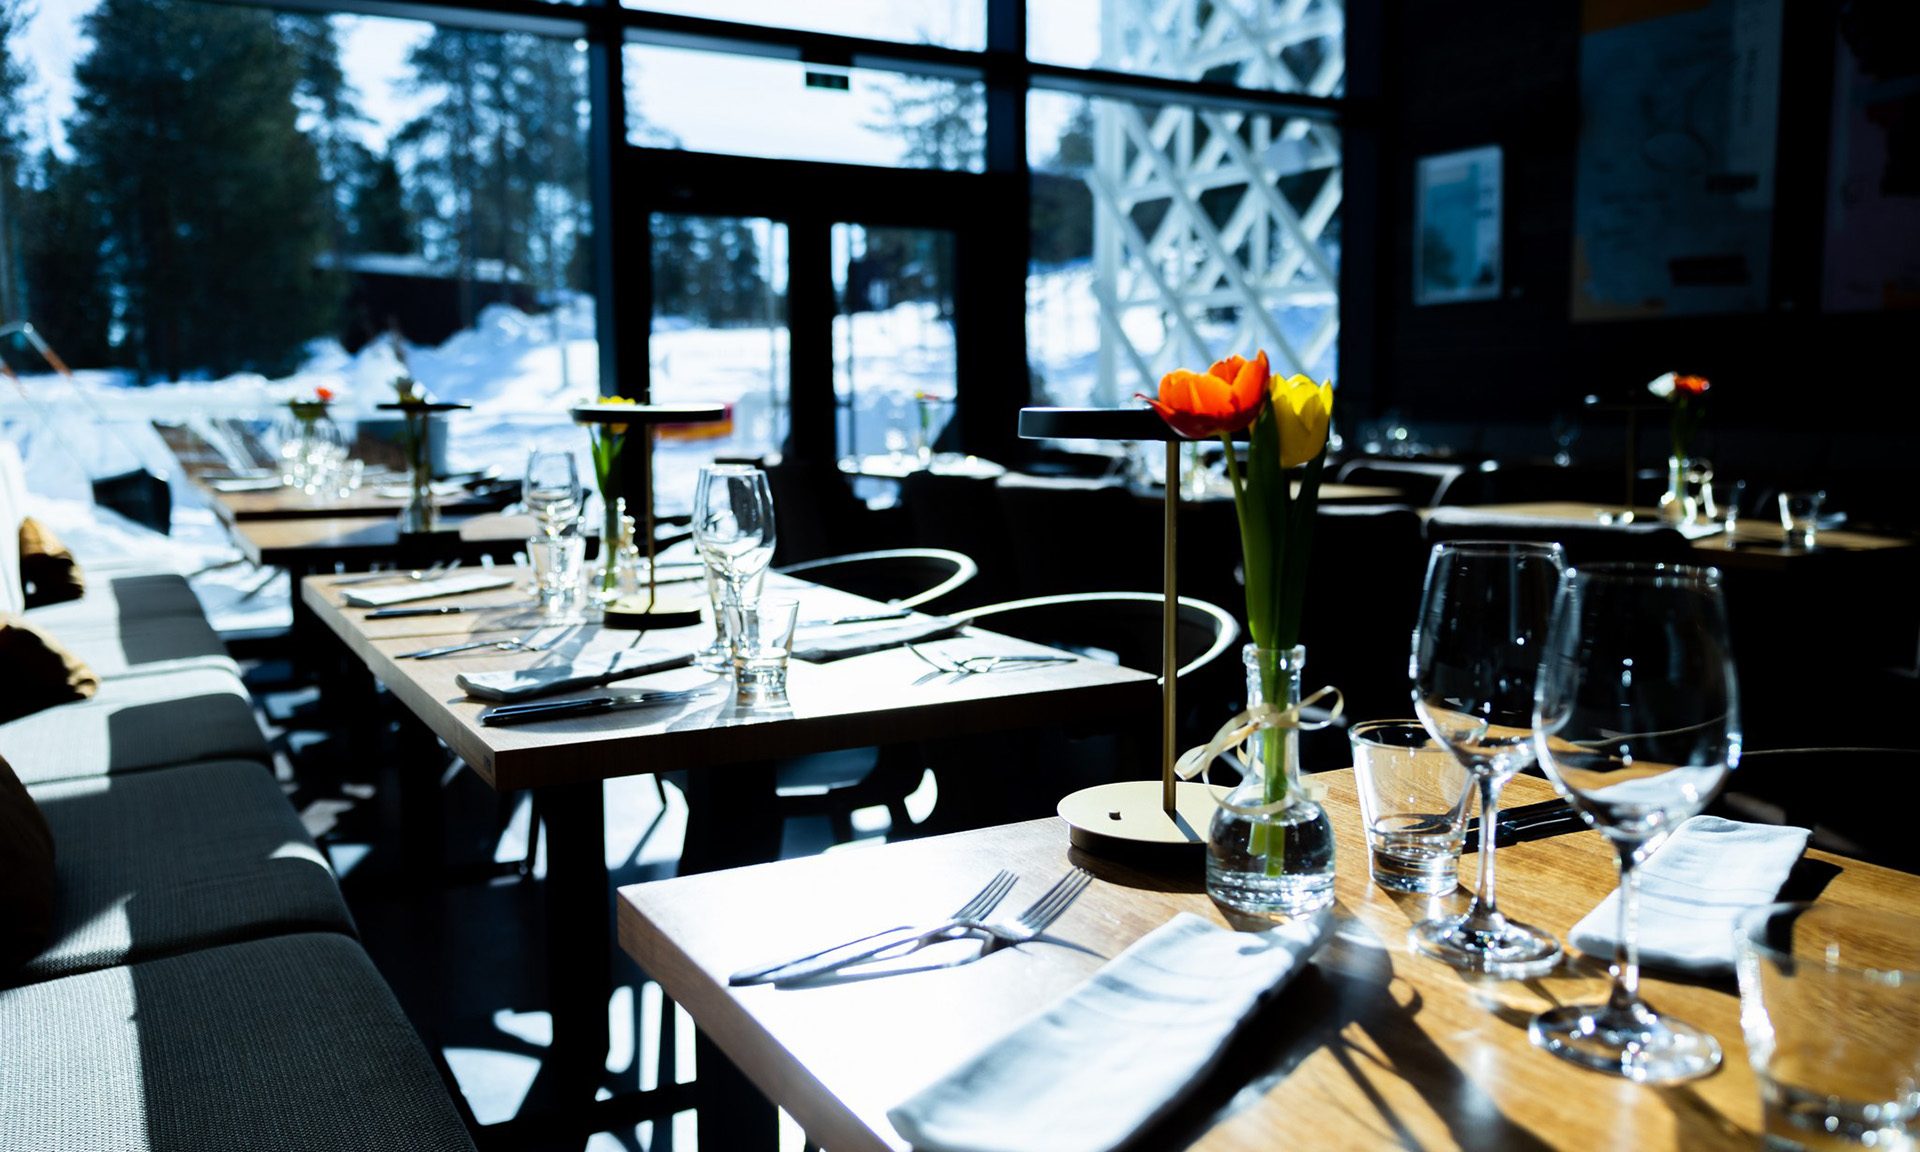 Table setting in Rakas restaurant in sunny winter day.